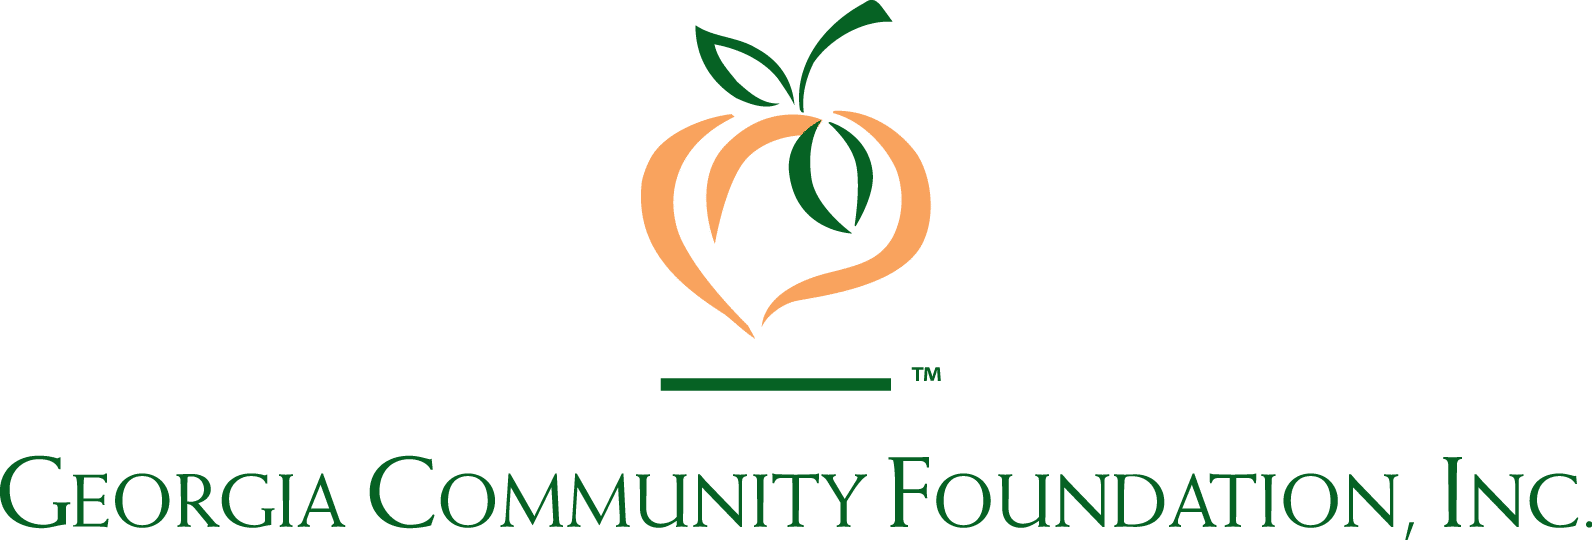 Georgia Community Foundation